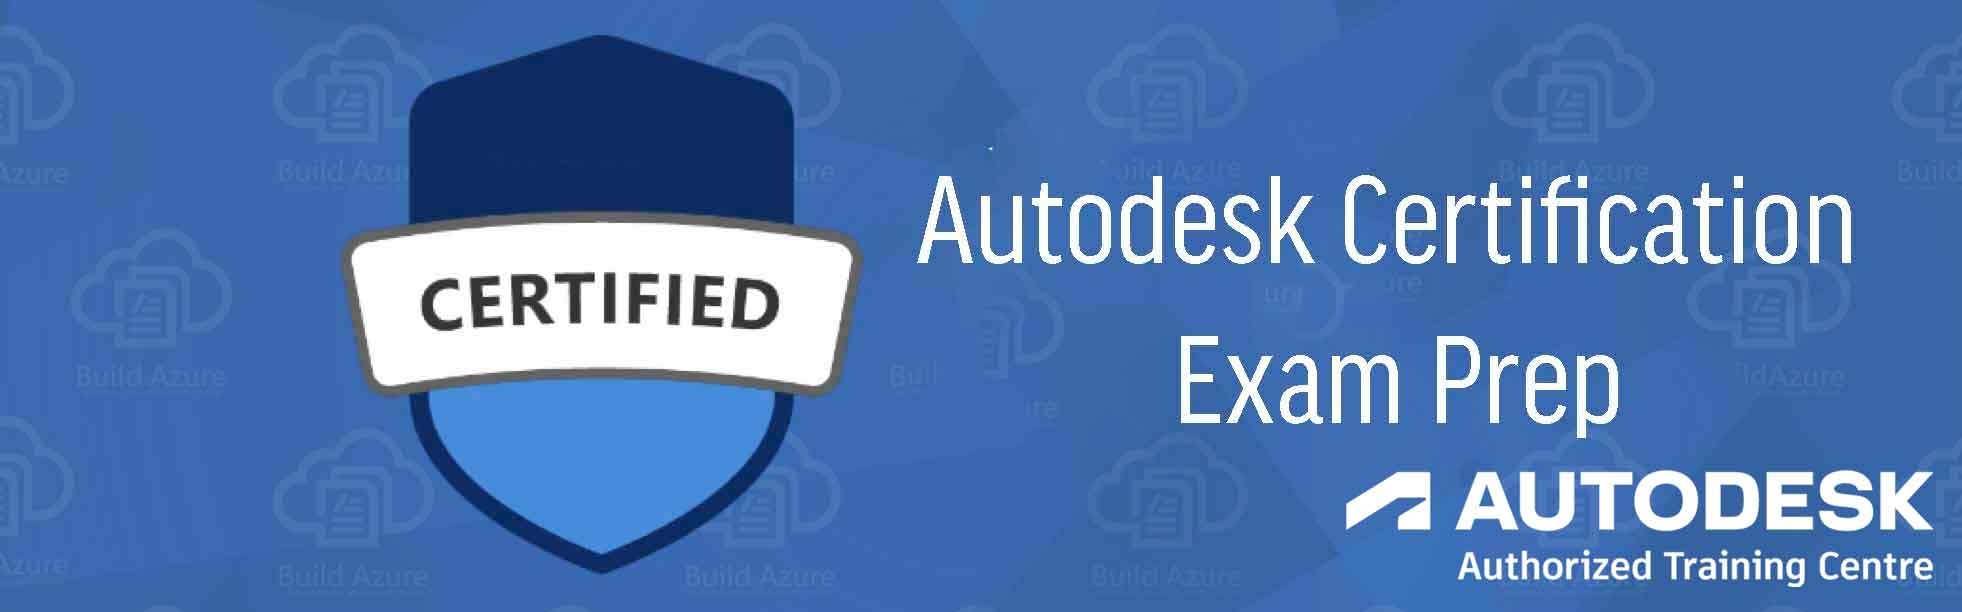 Autodesk Certification Exam Prep